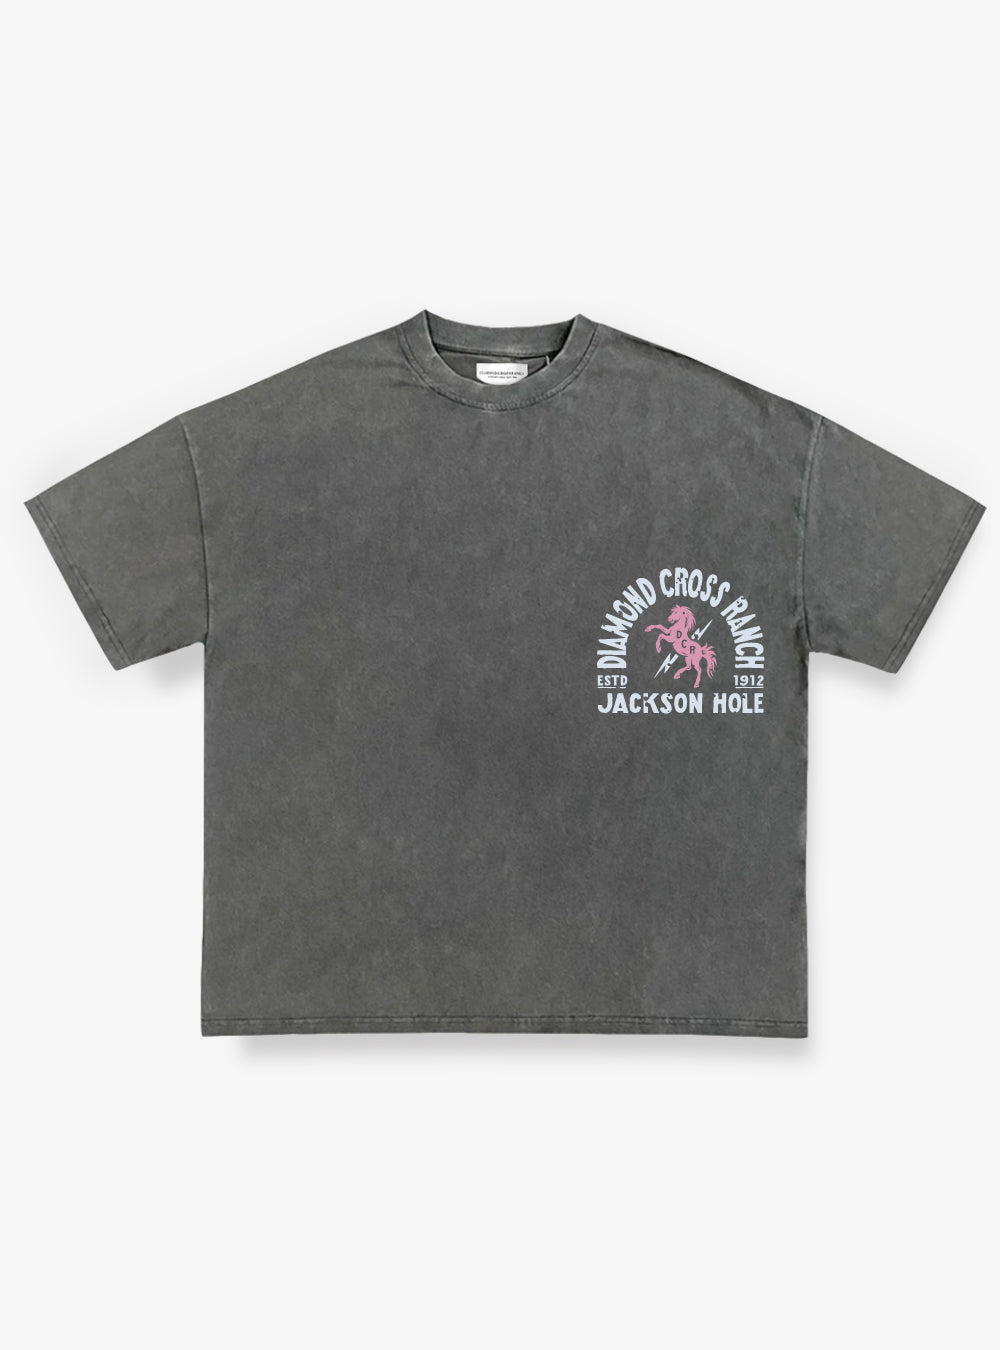 Diamond Cross Ranch Black T-Shirt